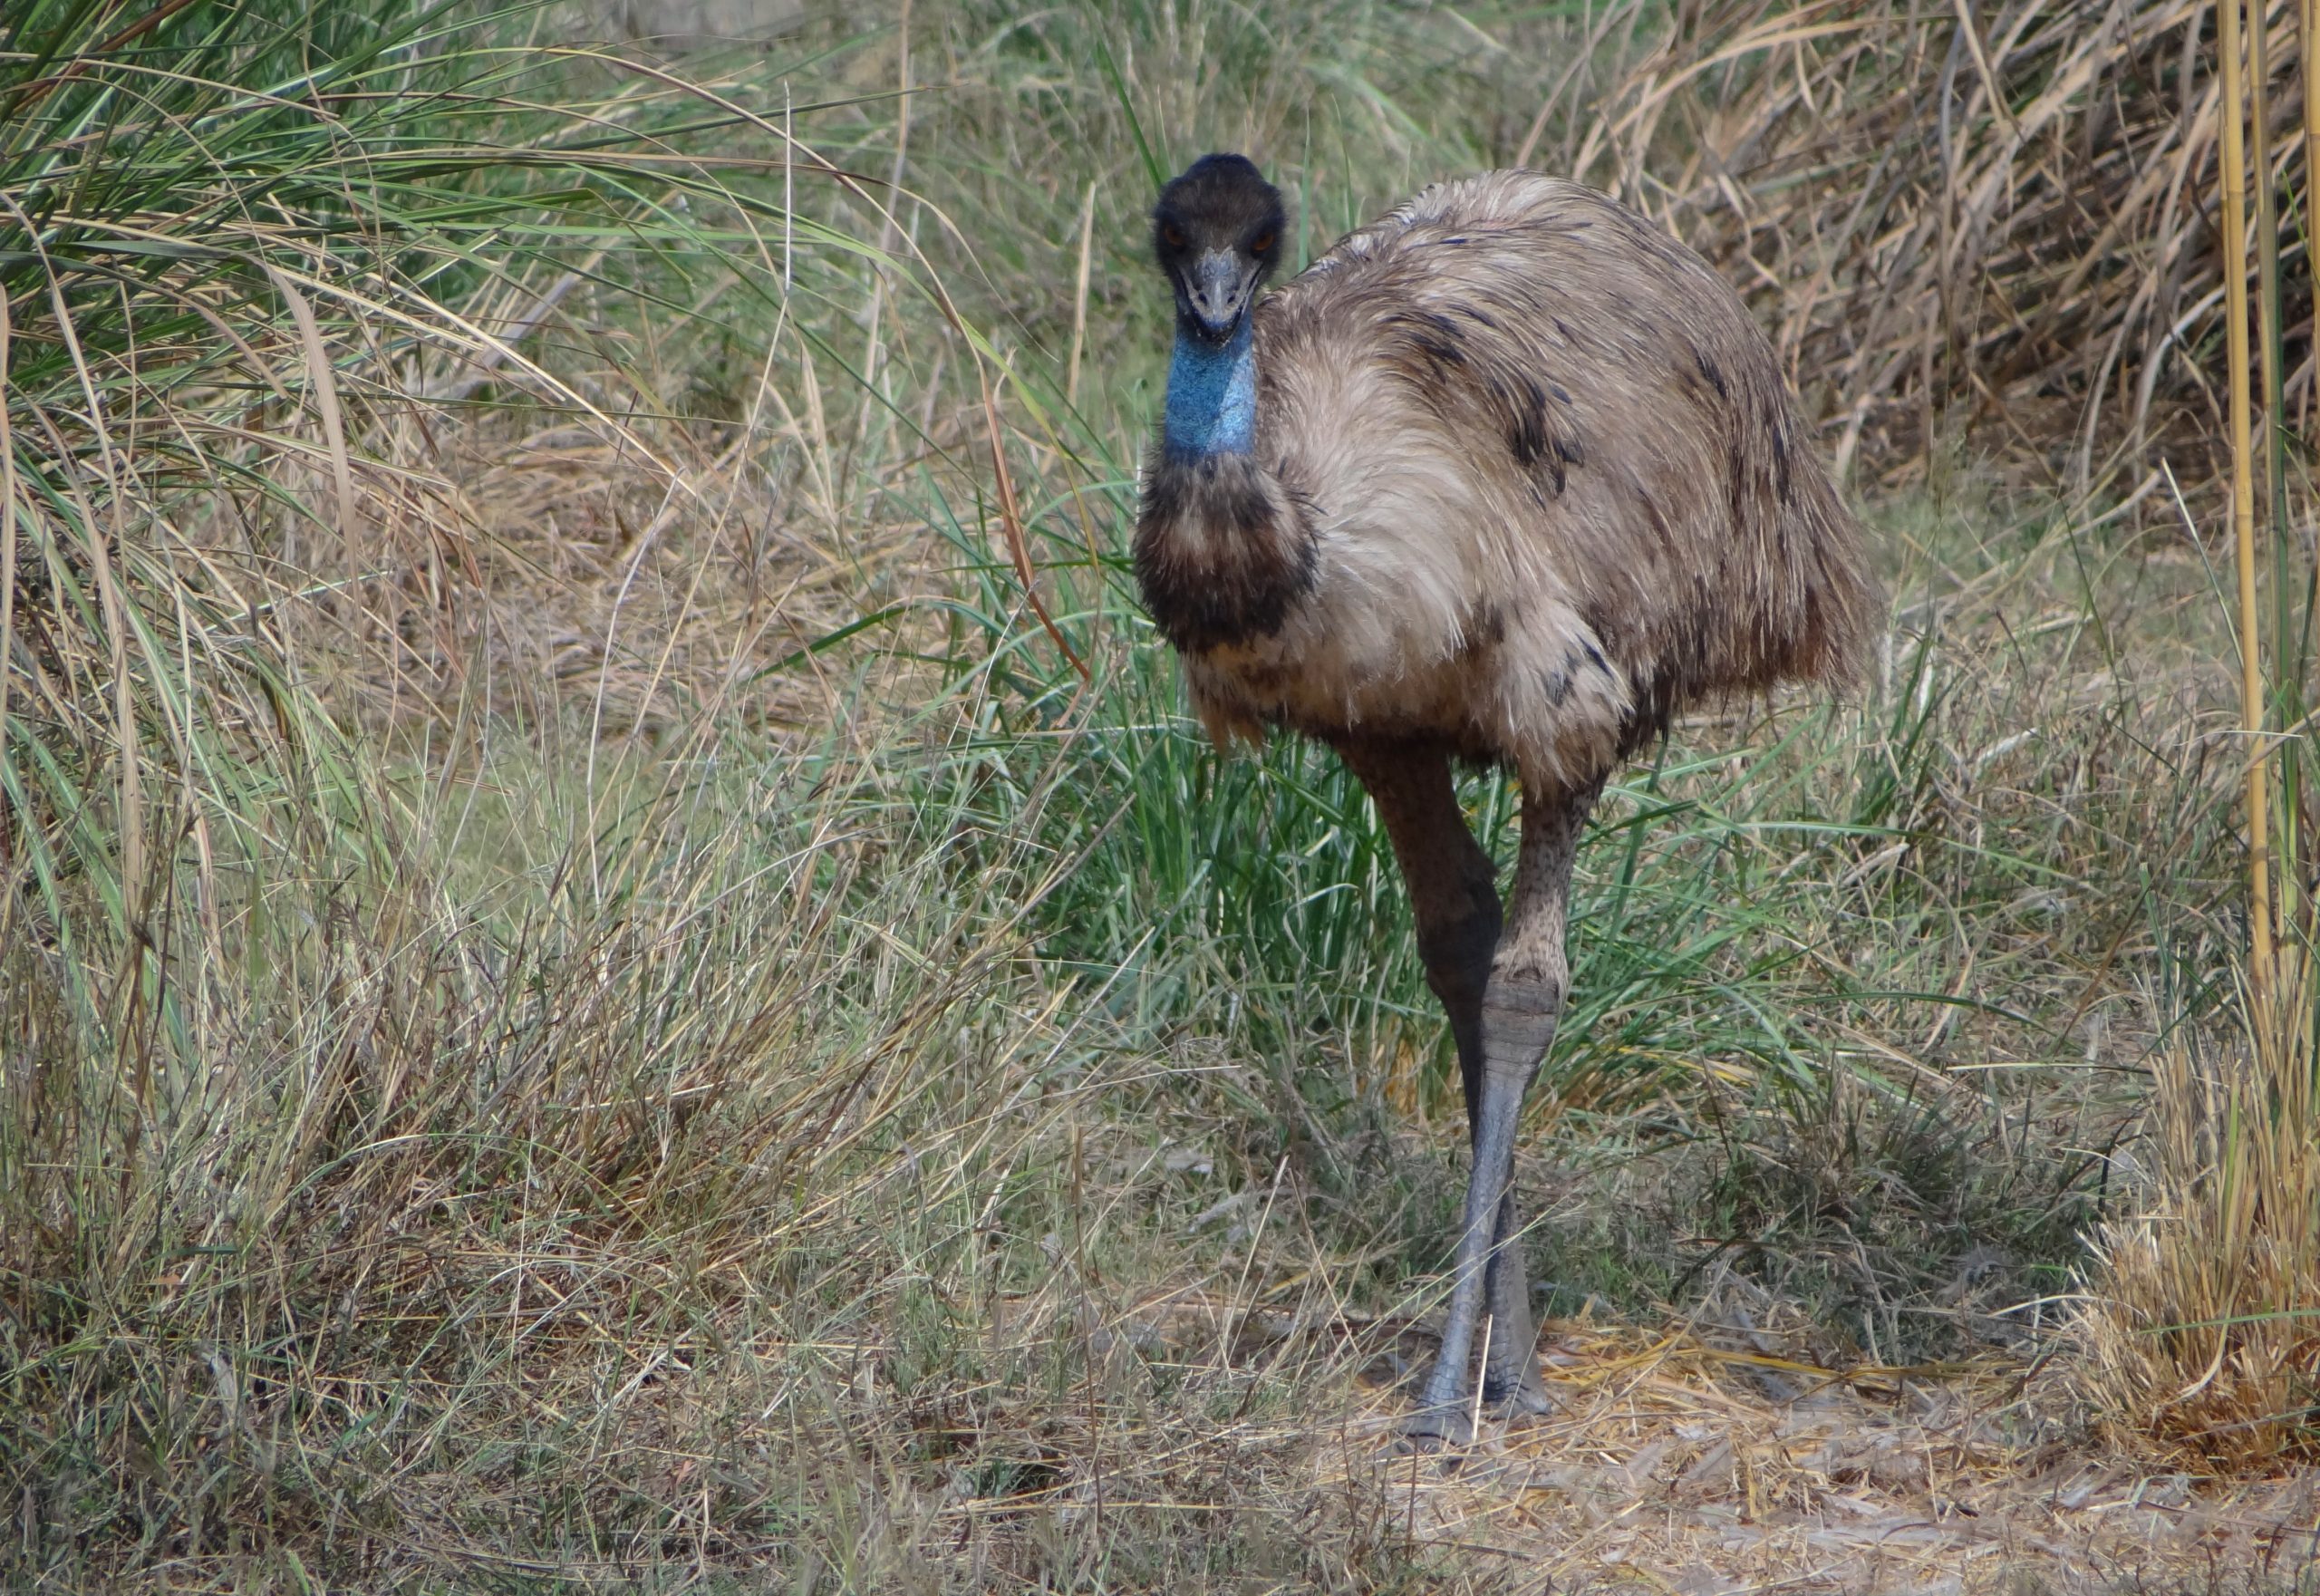 Emu- Second largest bird.